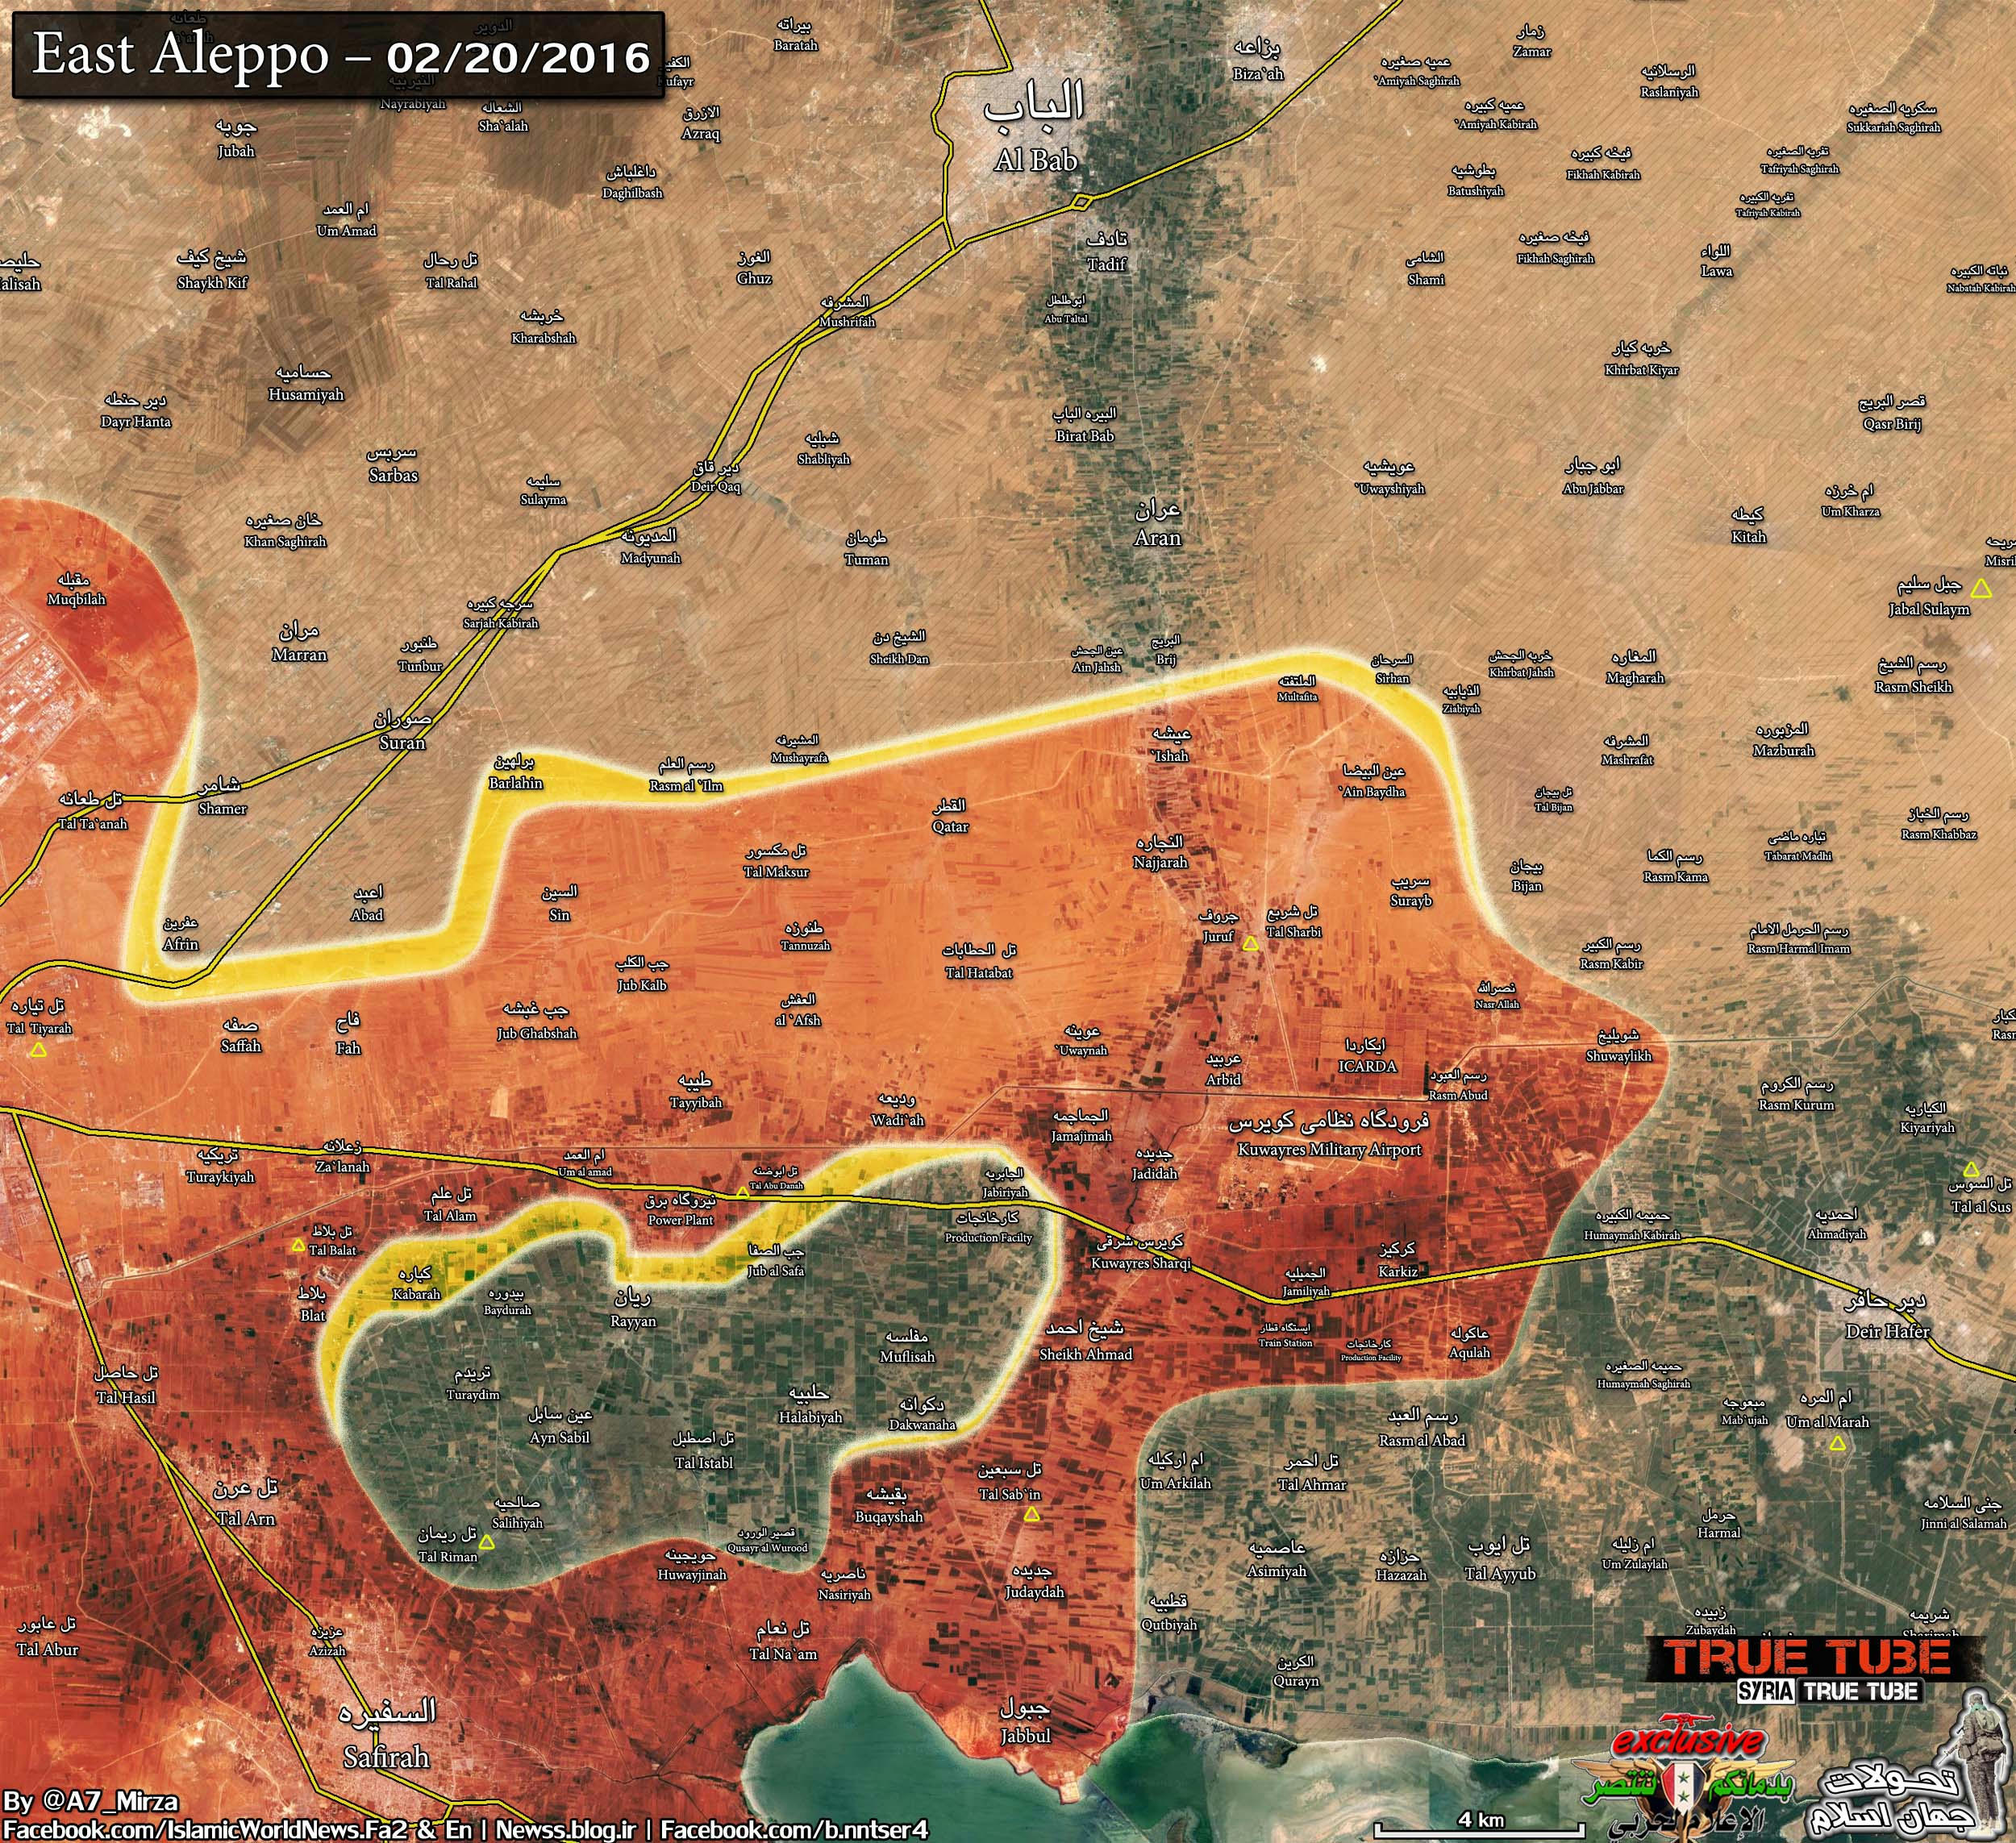 East Allepo map updated : syriancivilwar